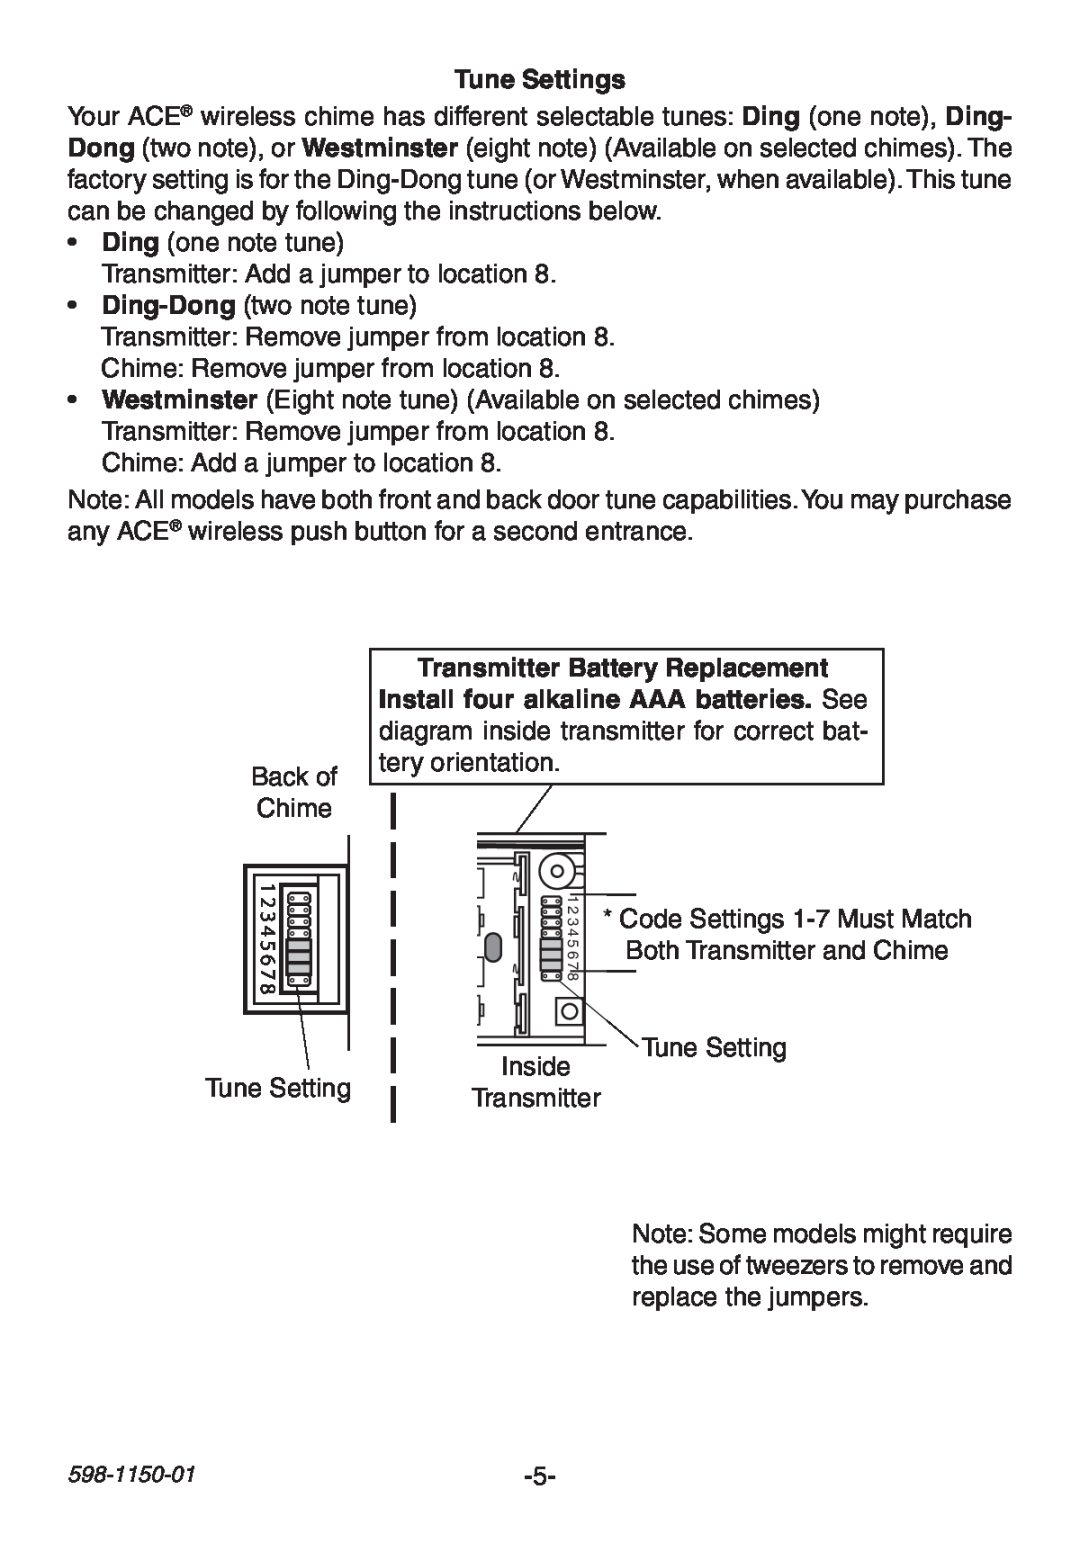 Heath Zenith AC-6507 manual Tune Settings, Transmitter Battery Replacement 